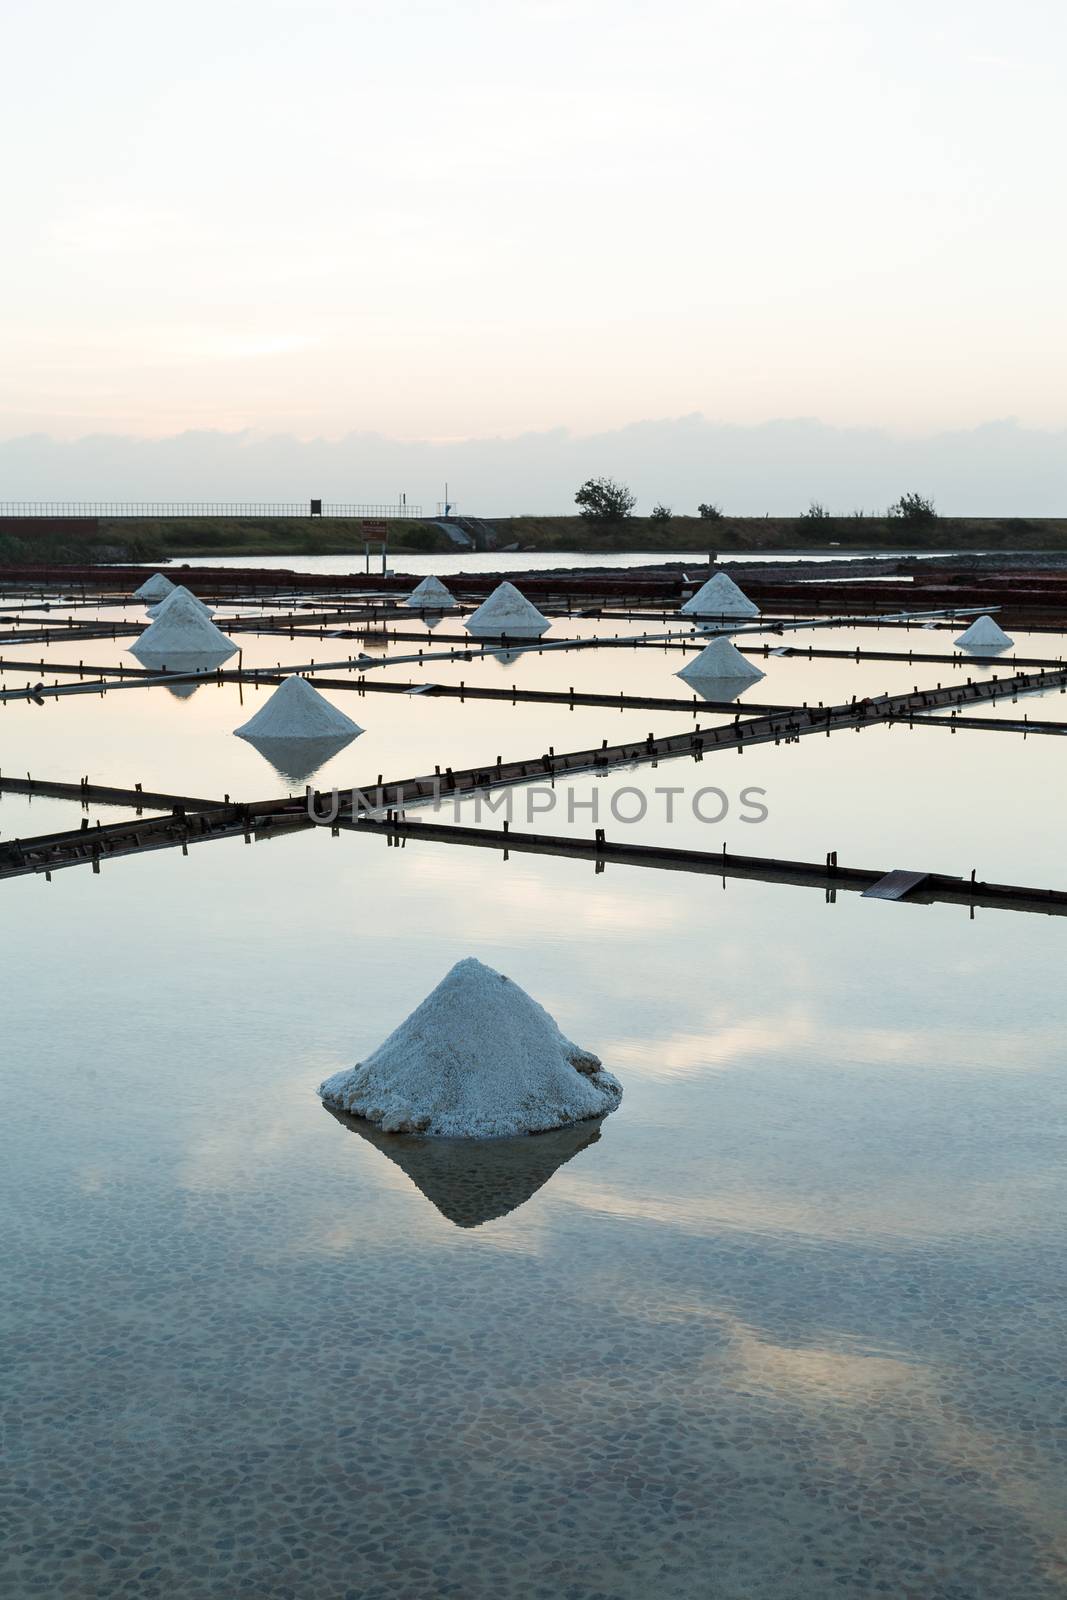 Sea salt in salt farm by leungchopan